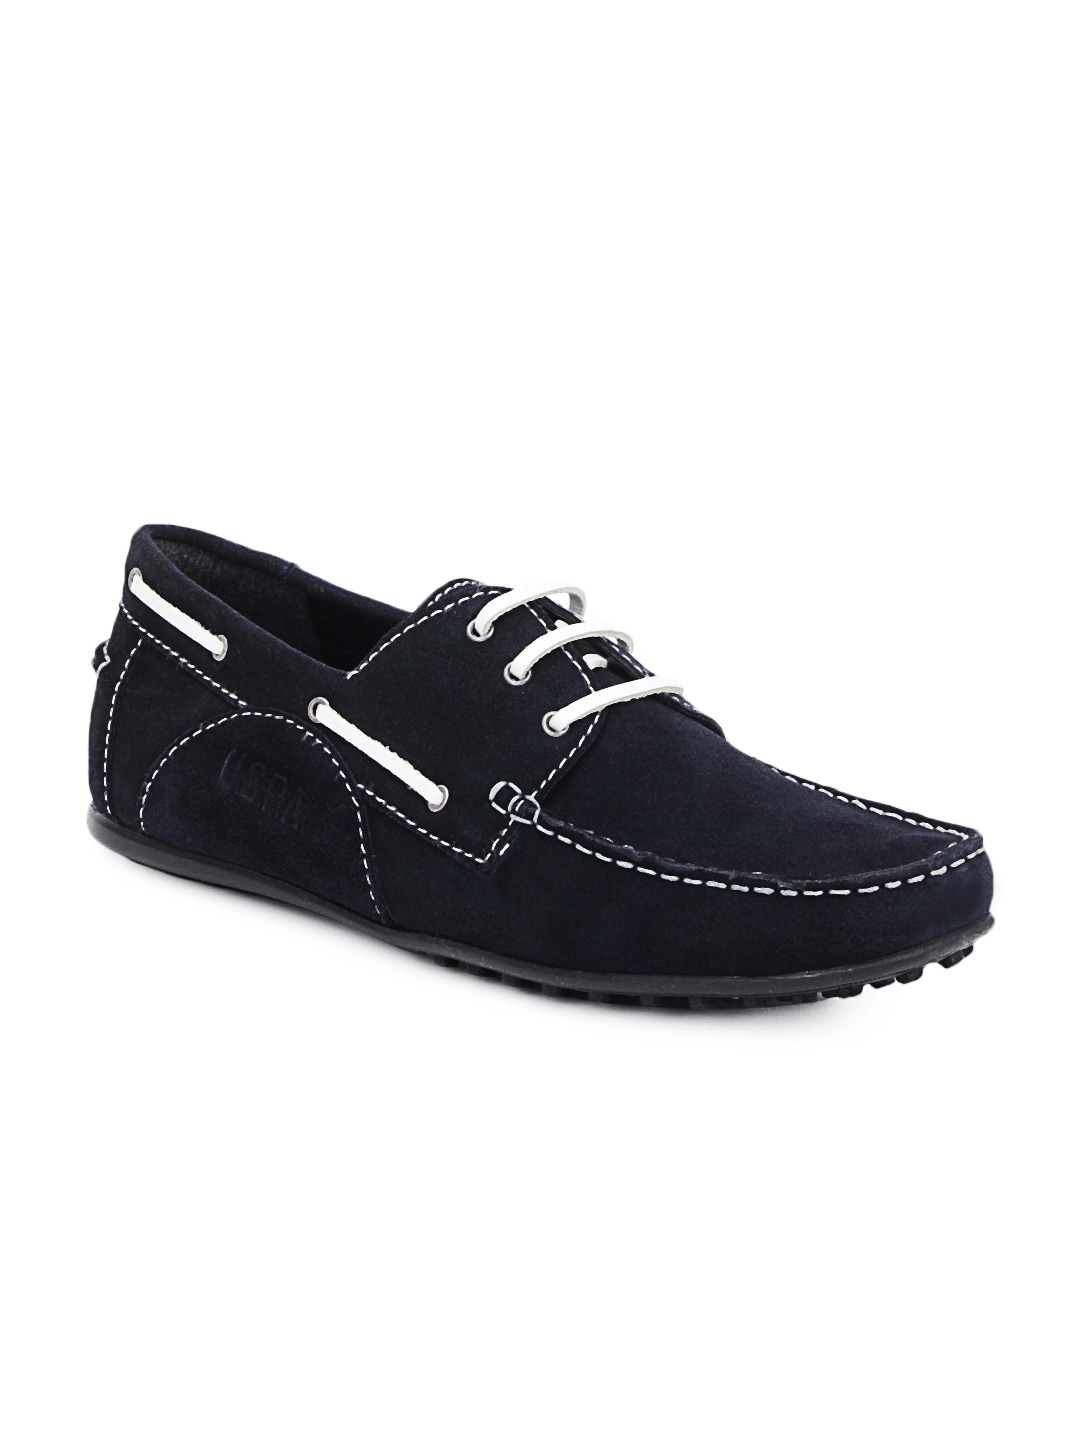 U.S. Polo Assn. Men Navy Blue Boat Shoes